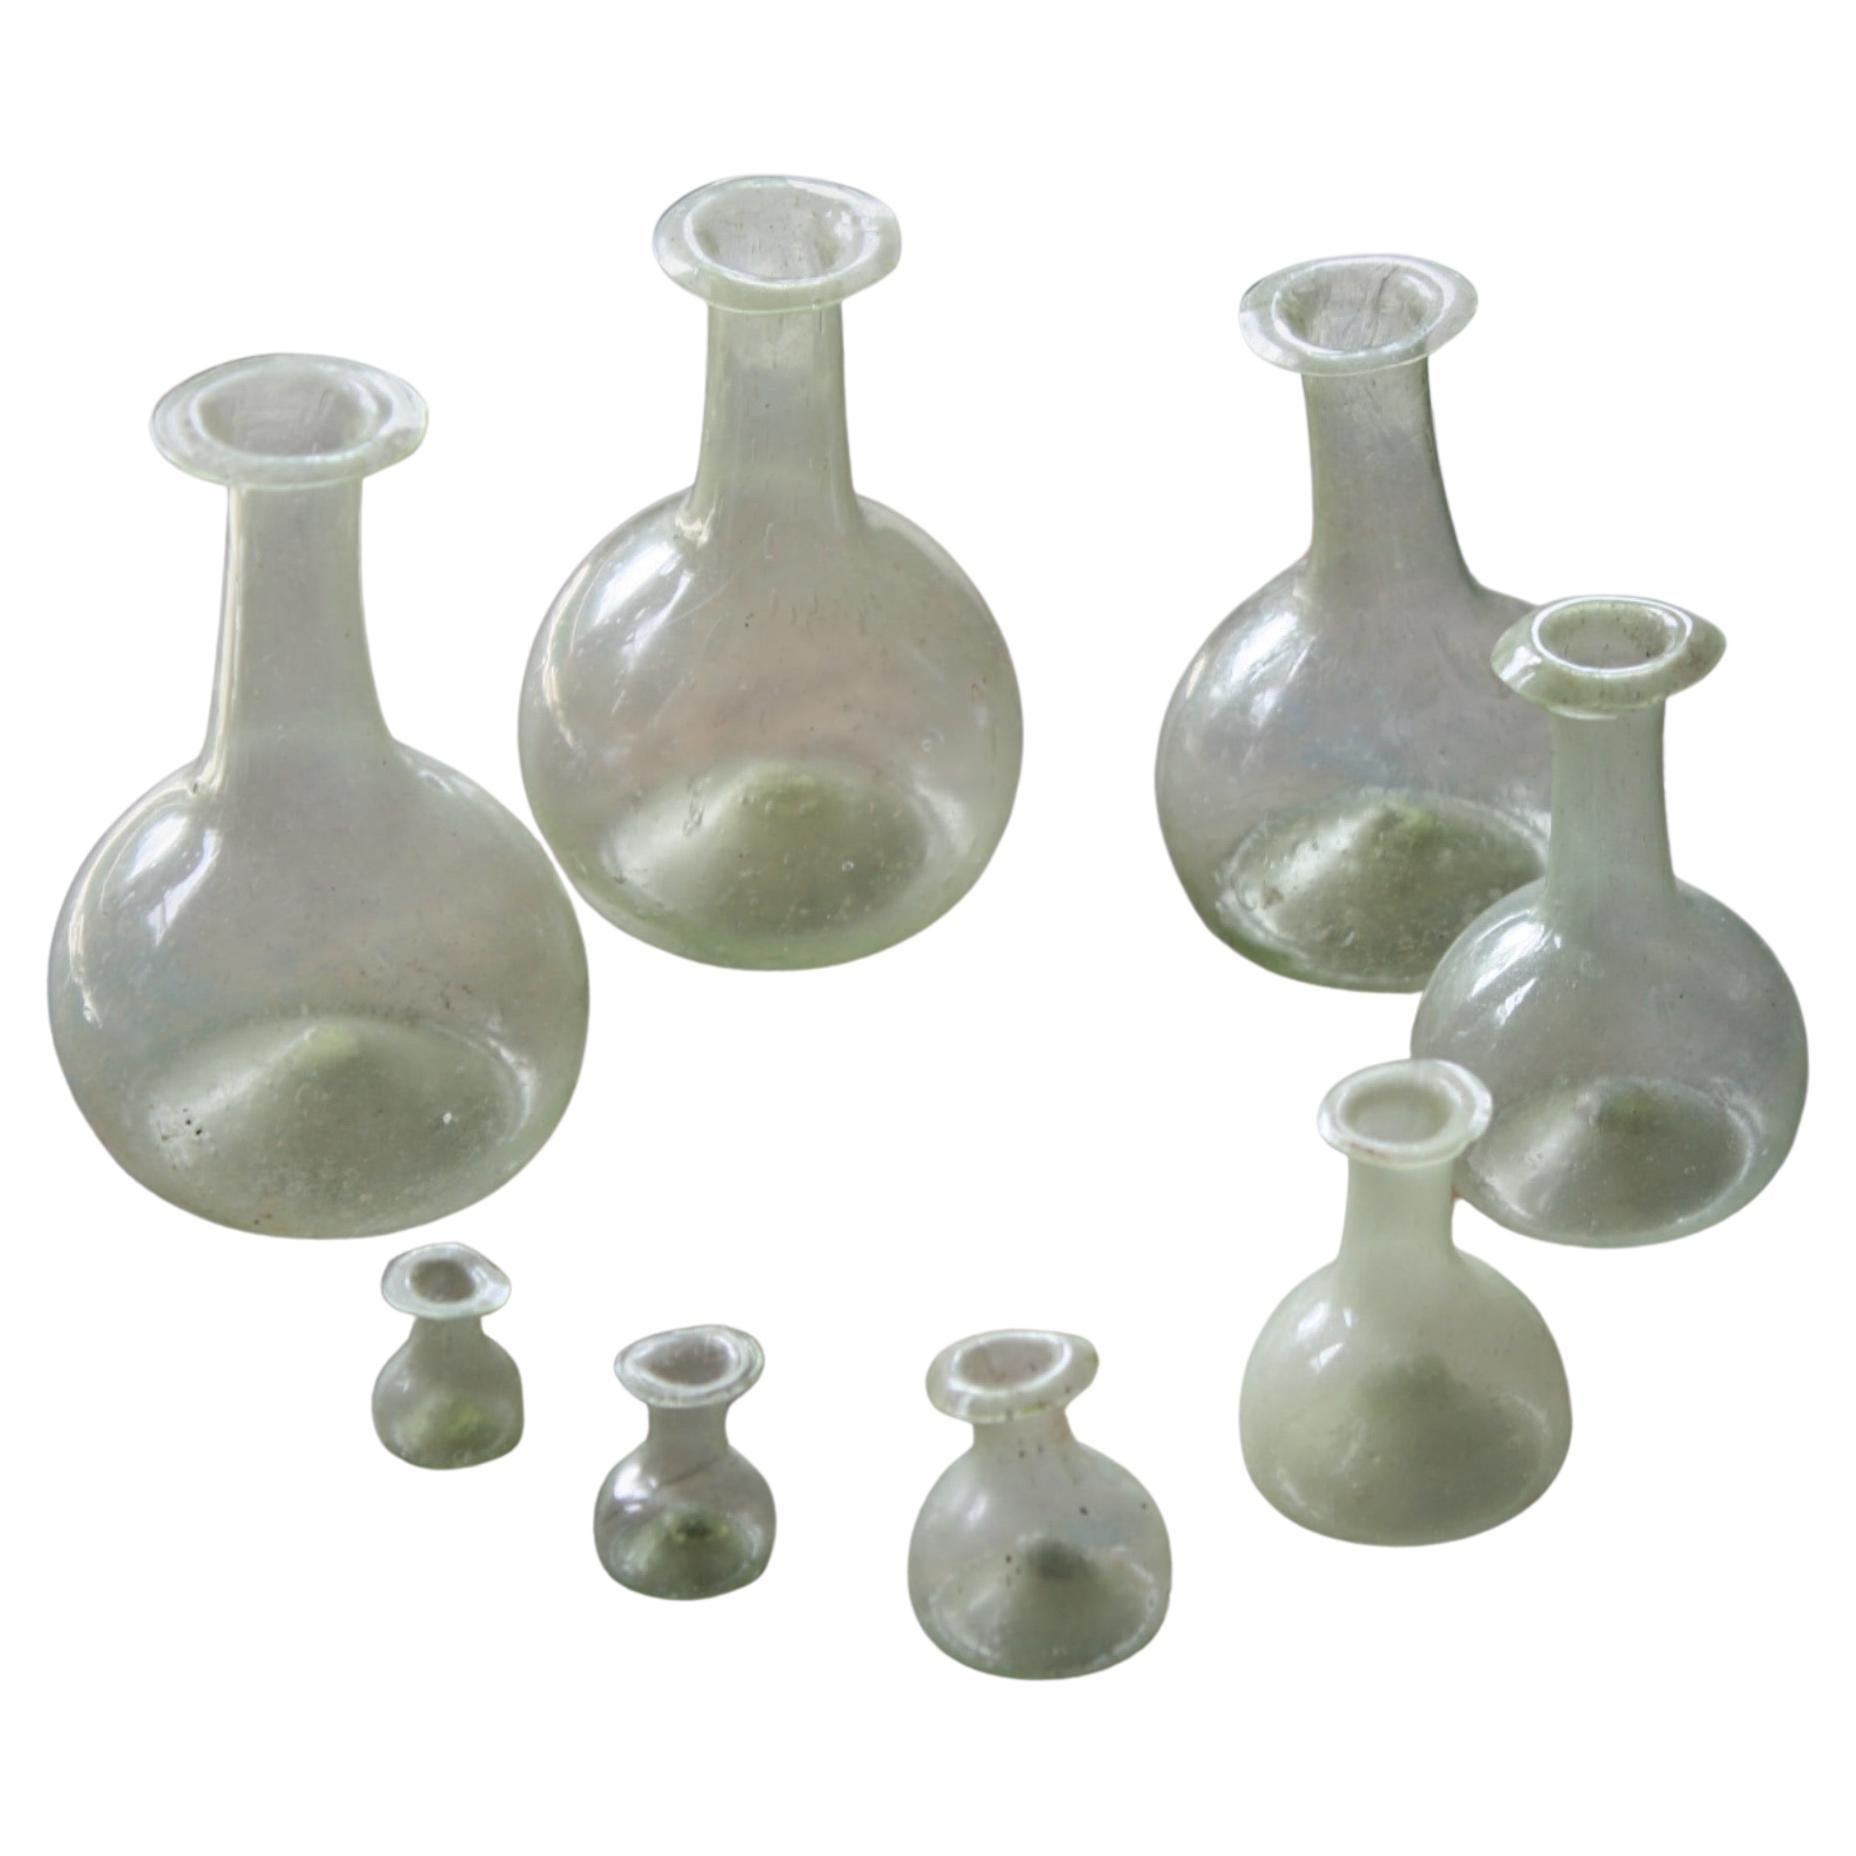 Roman Collection of Graduated Glass "Lachrymatories" Tear Catchers Vials Curios